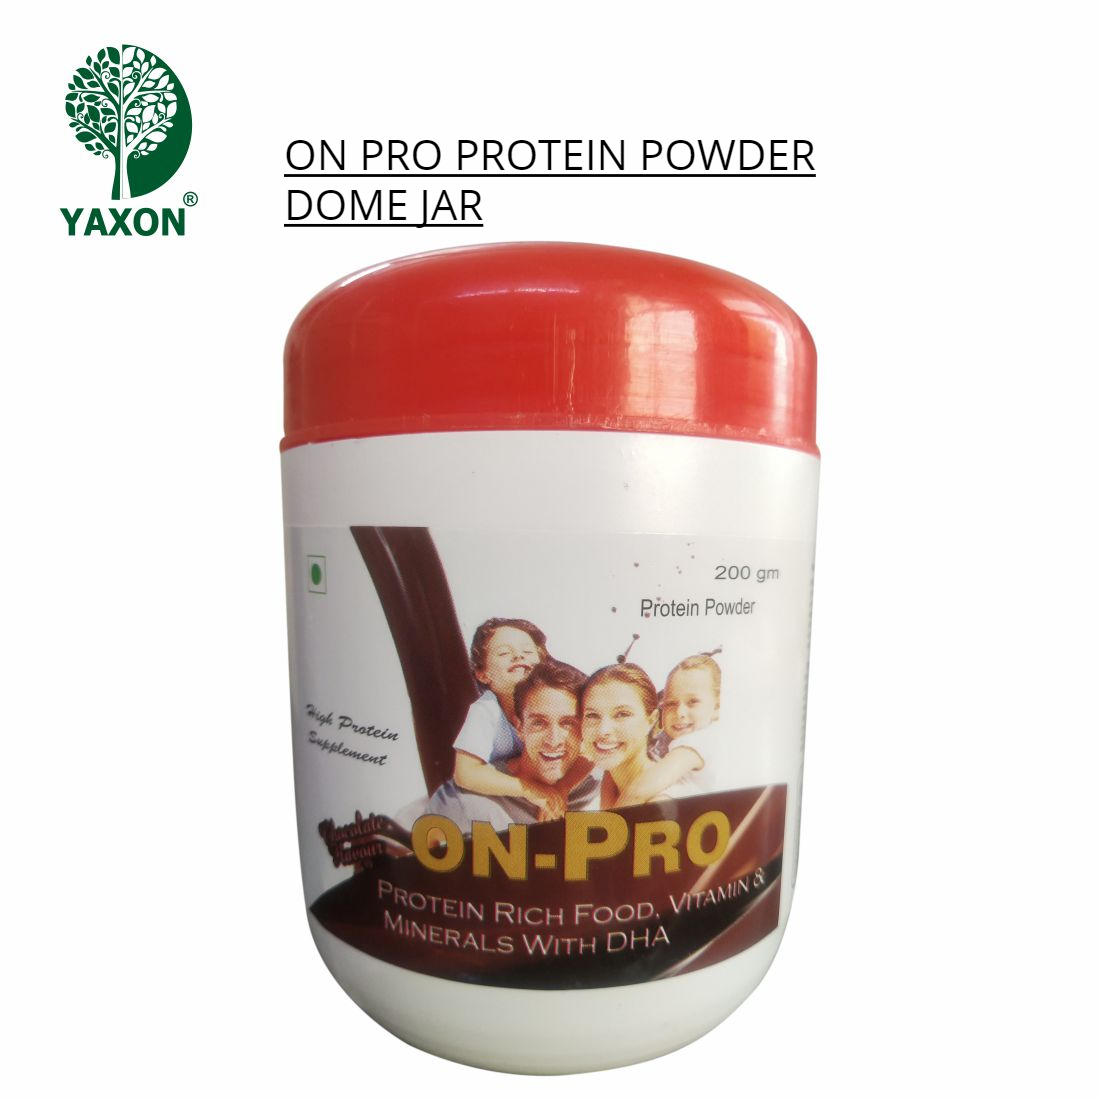 YAXON ON PRO Chocolate Protein Powder Dome Jar